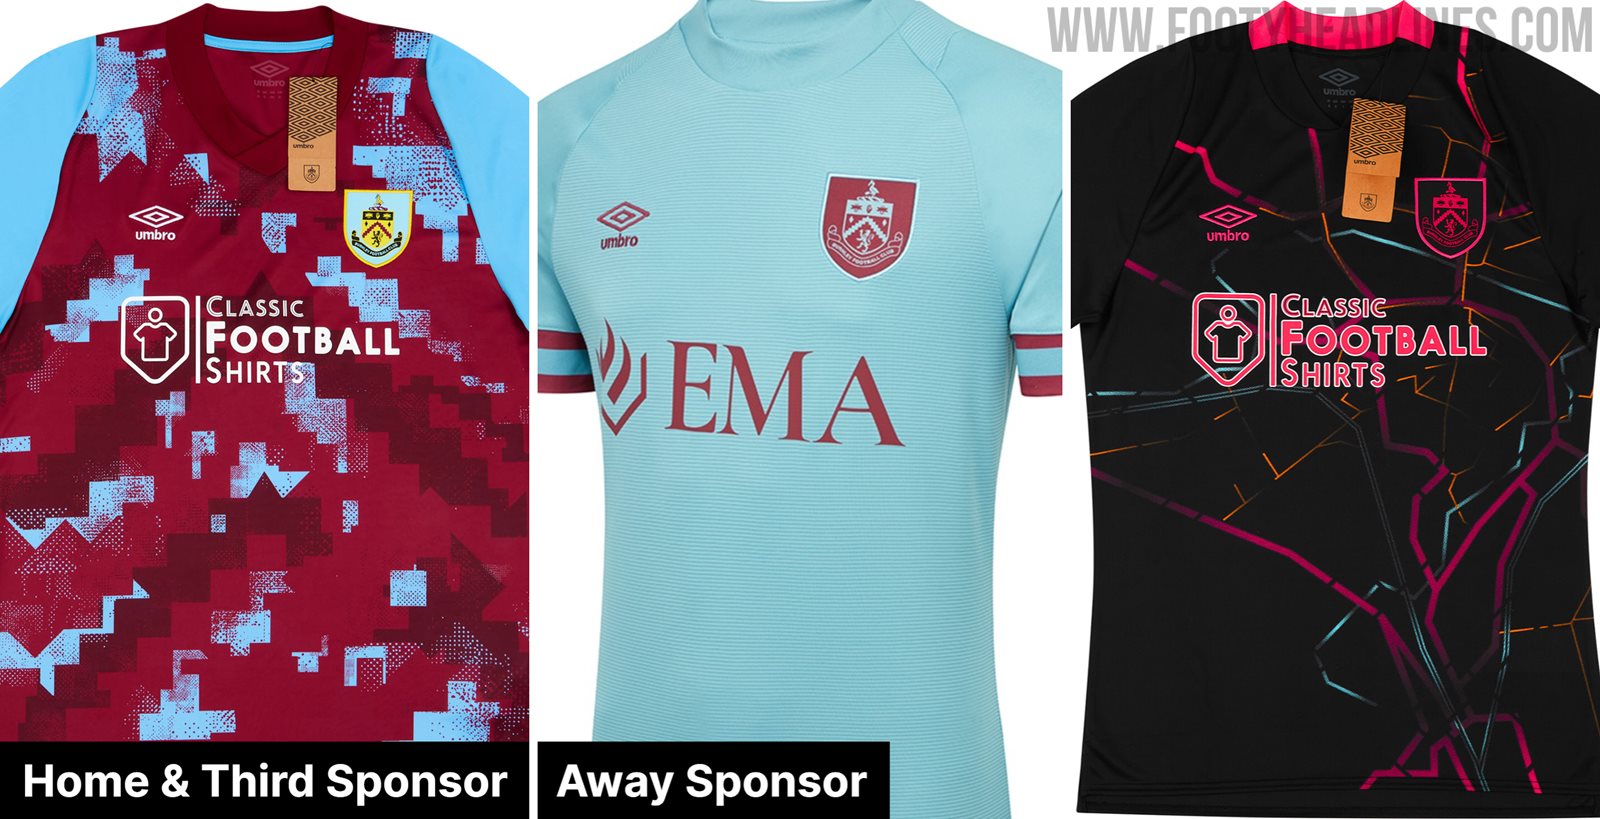 Burnley, Fulham opt for betting shirt sponsorships ahead of ban